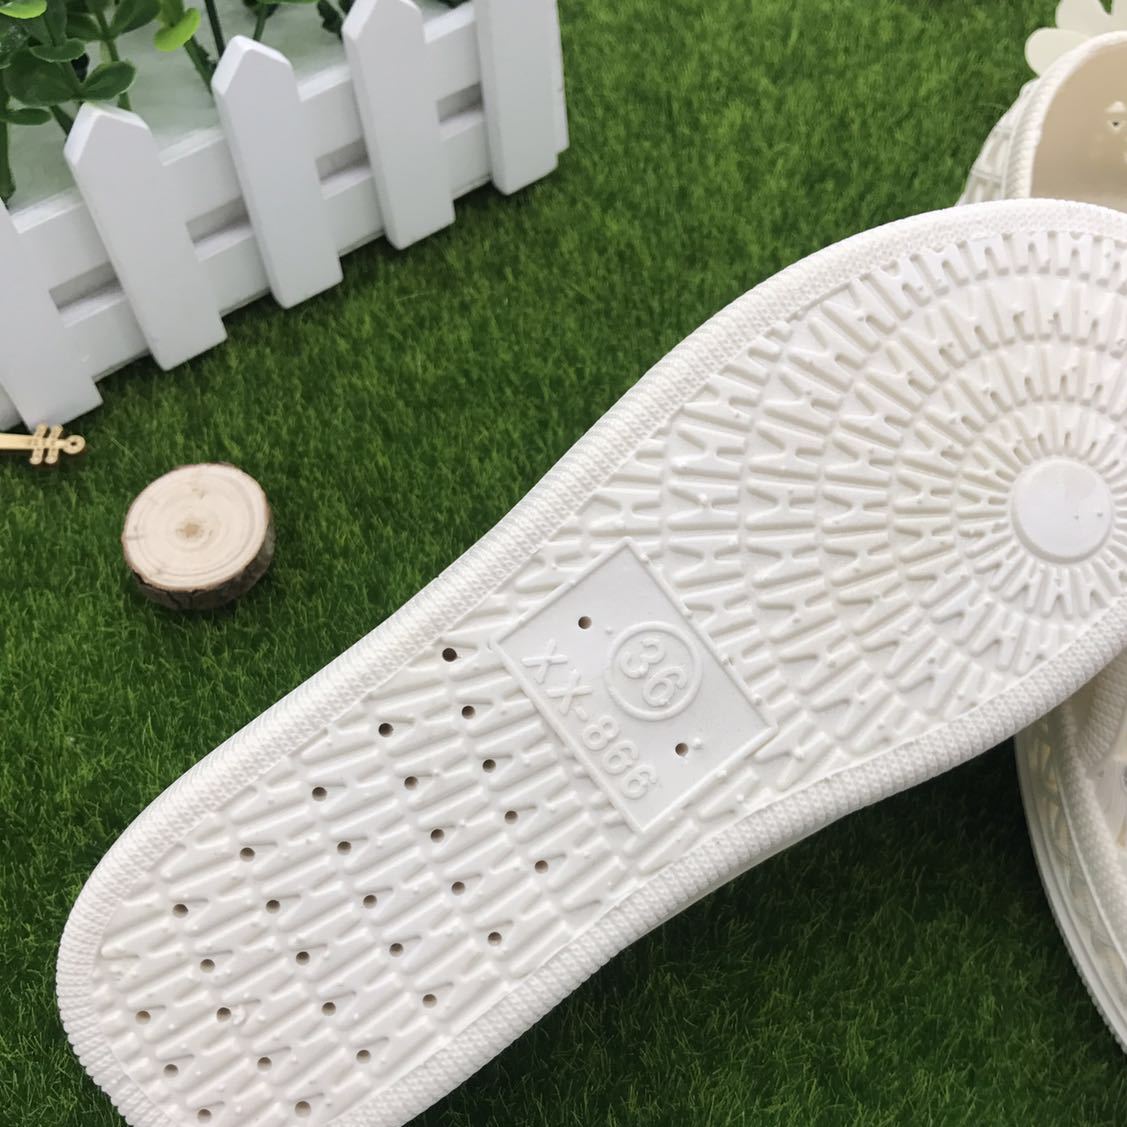 Hot 2019 new women's sandals mother's shoes colorful women's sandals crocs price discount